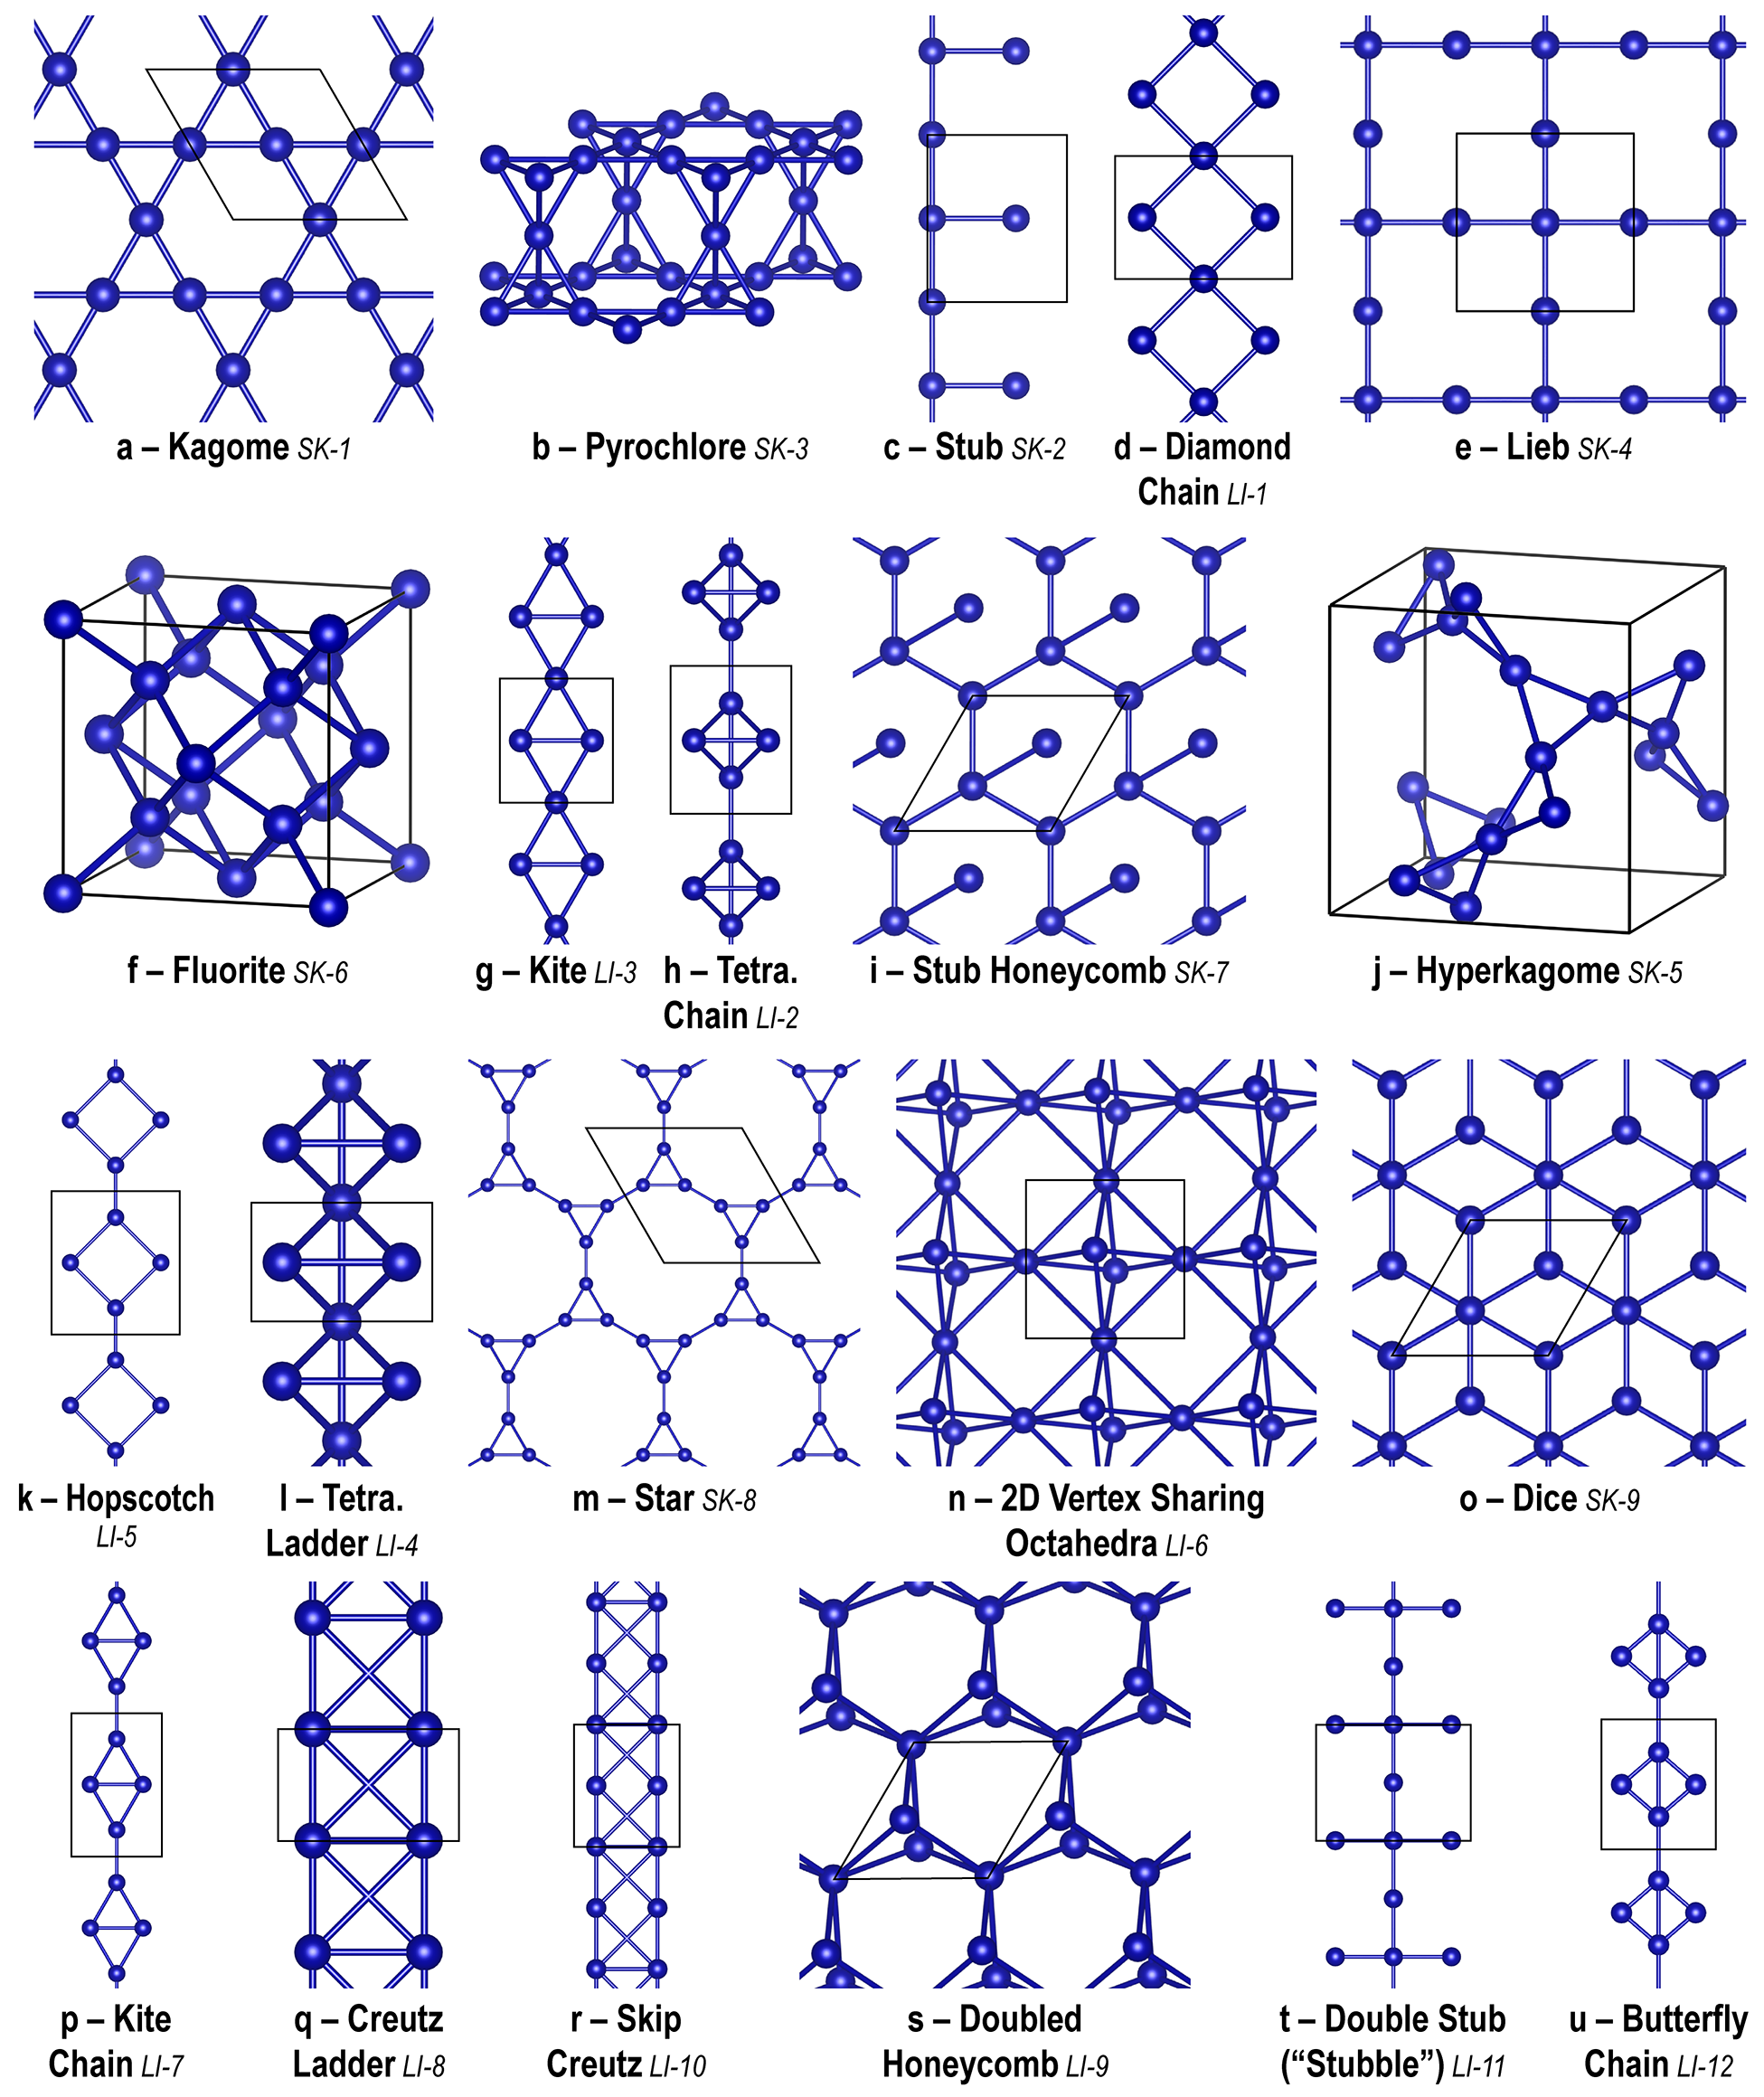 Linda Ye (Stanford), Flat bands in kagome lattice metals